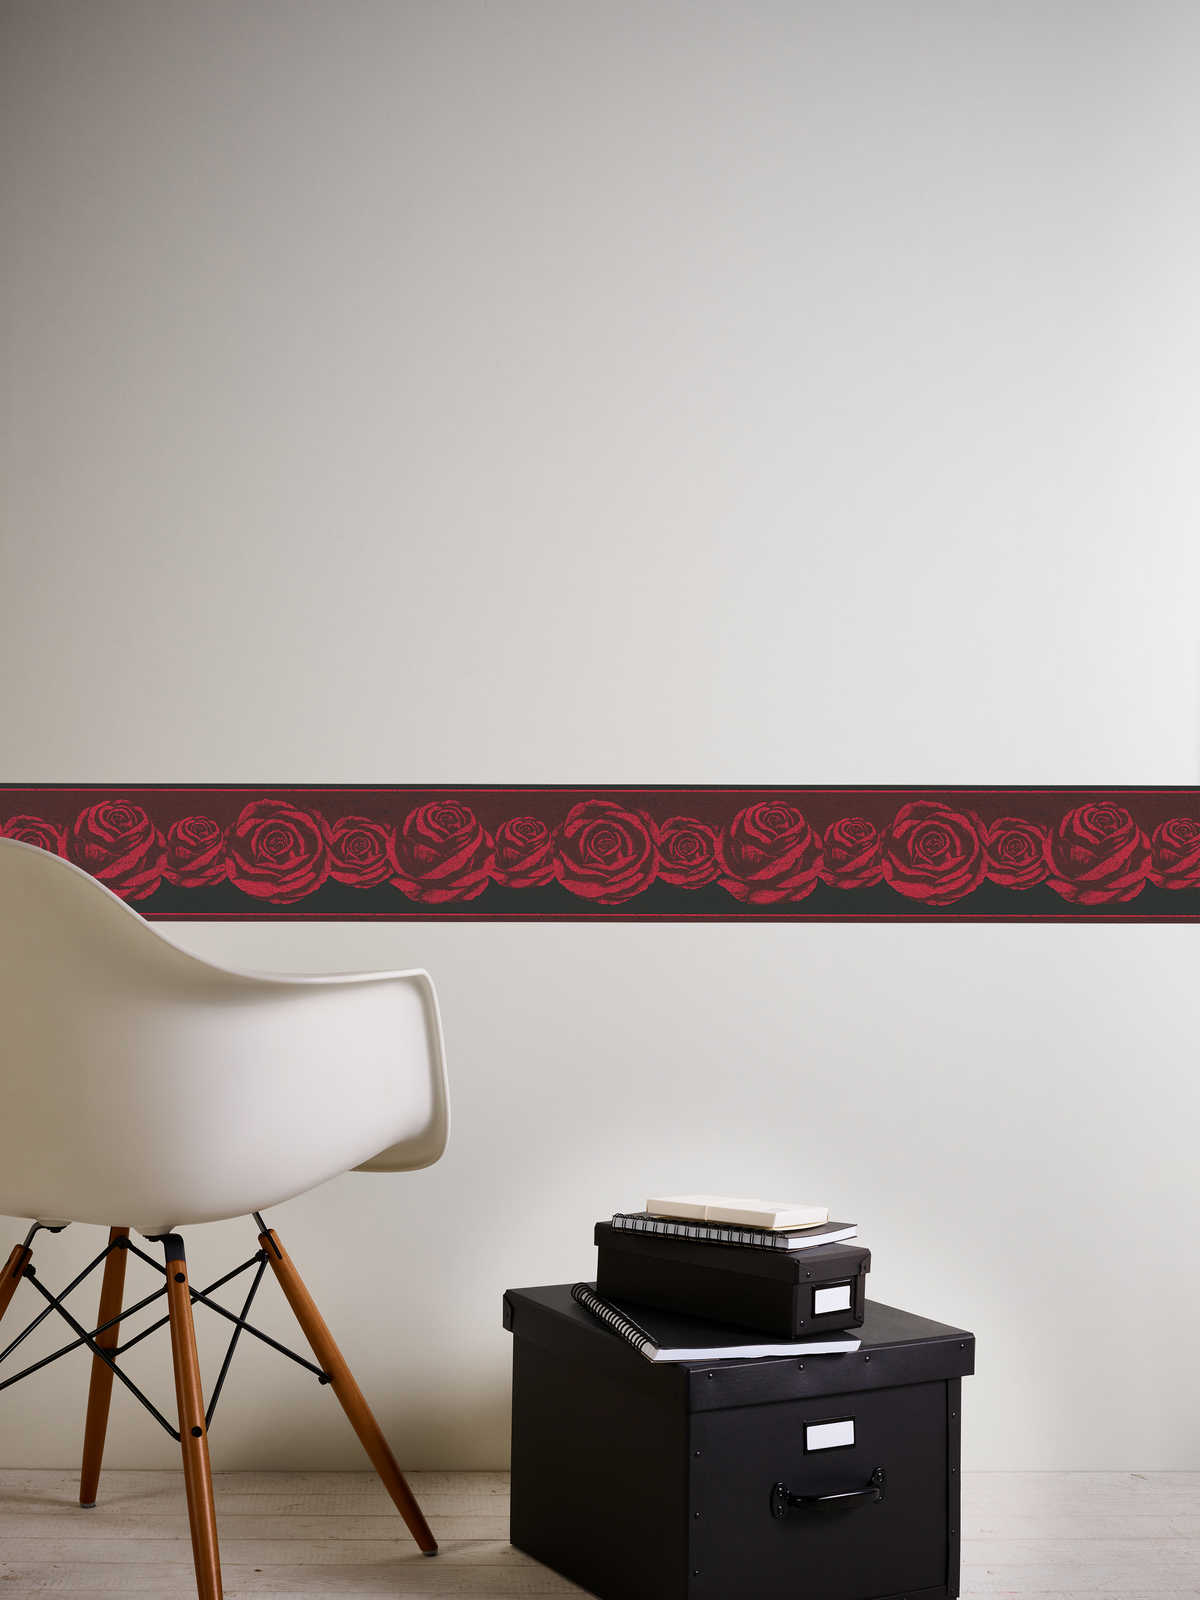             Papel pintado con cenefa negro-rojo con motivos de rosas
        